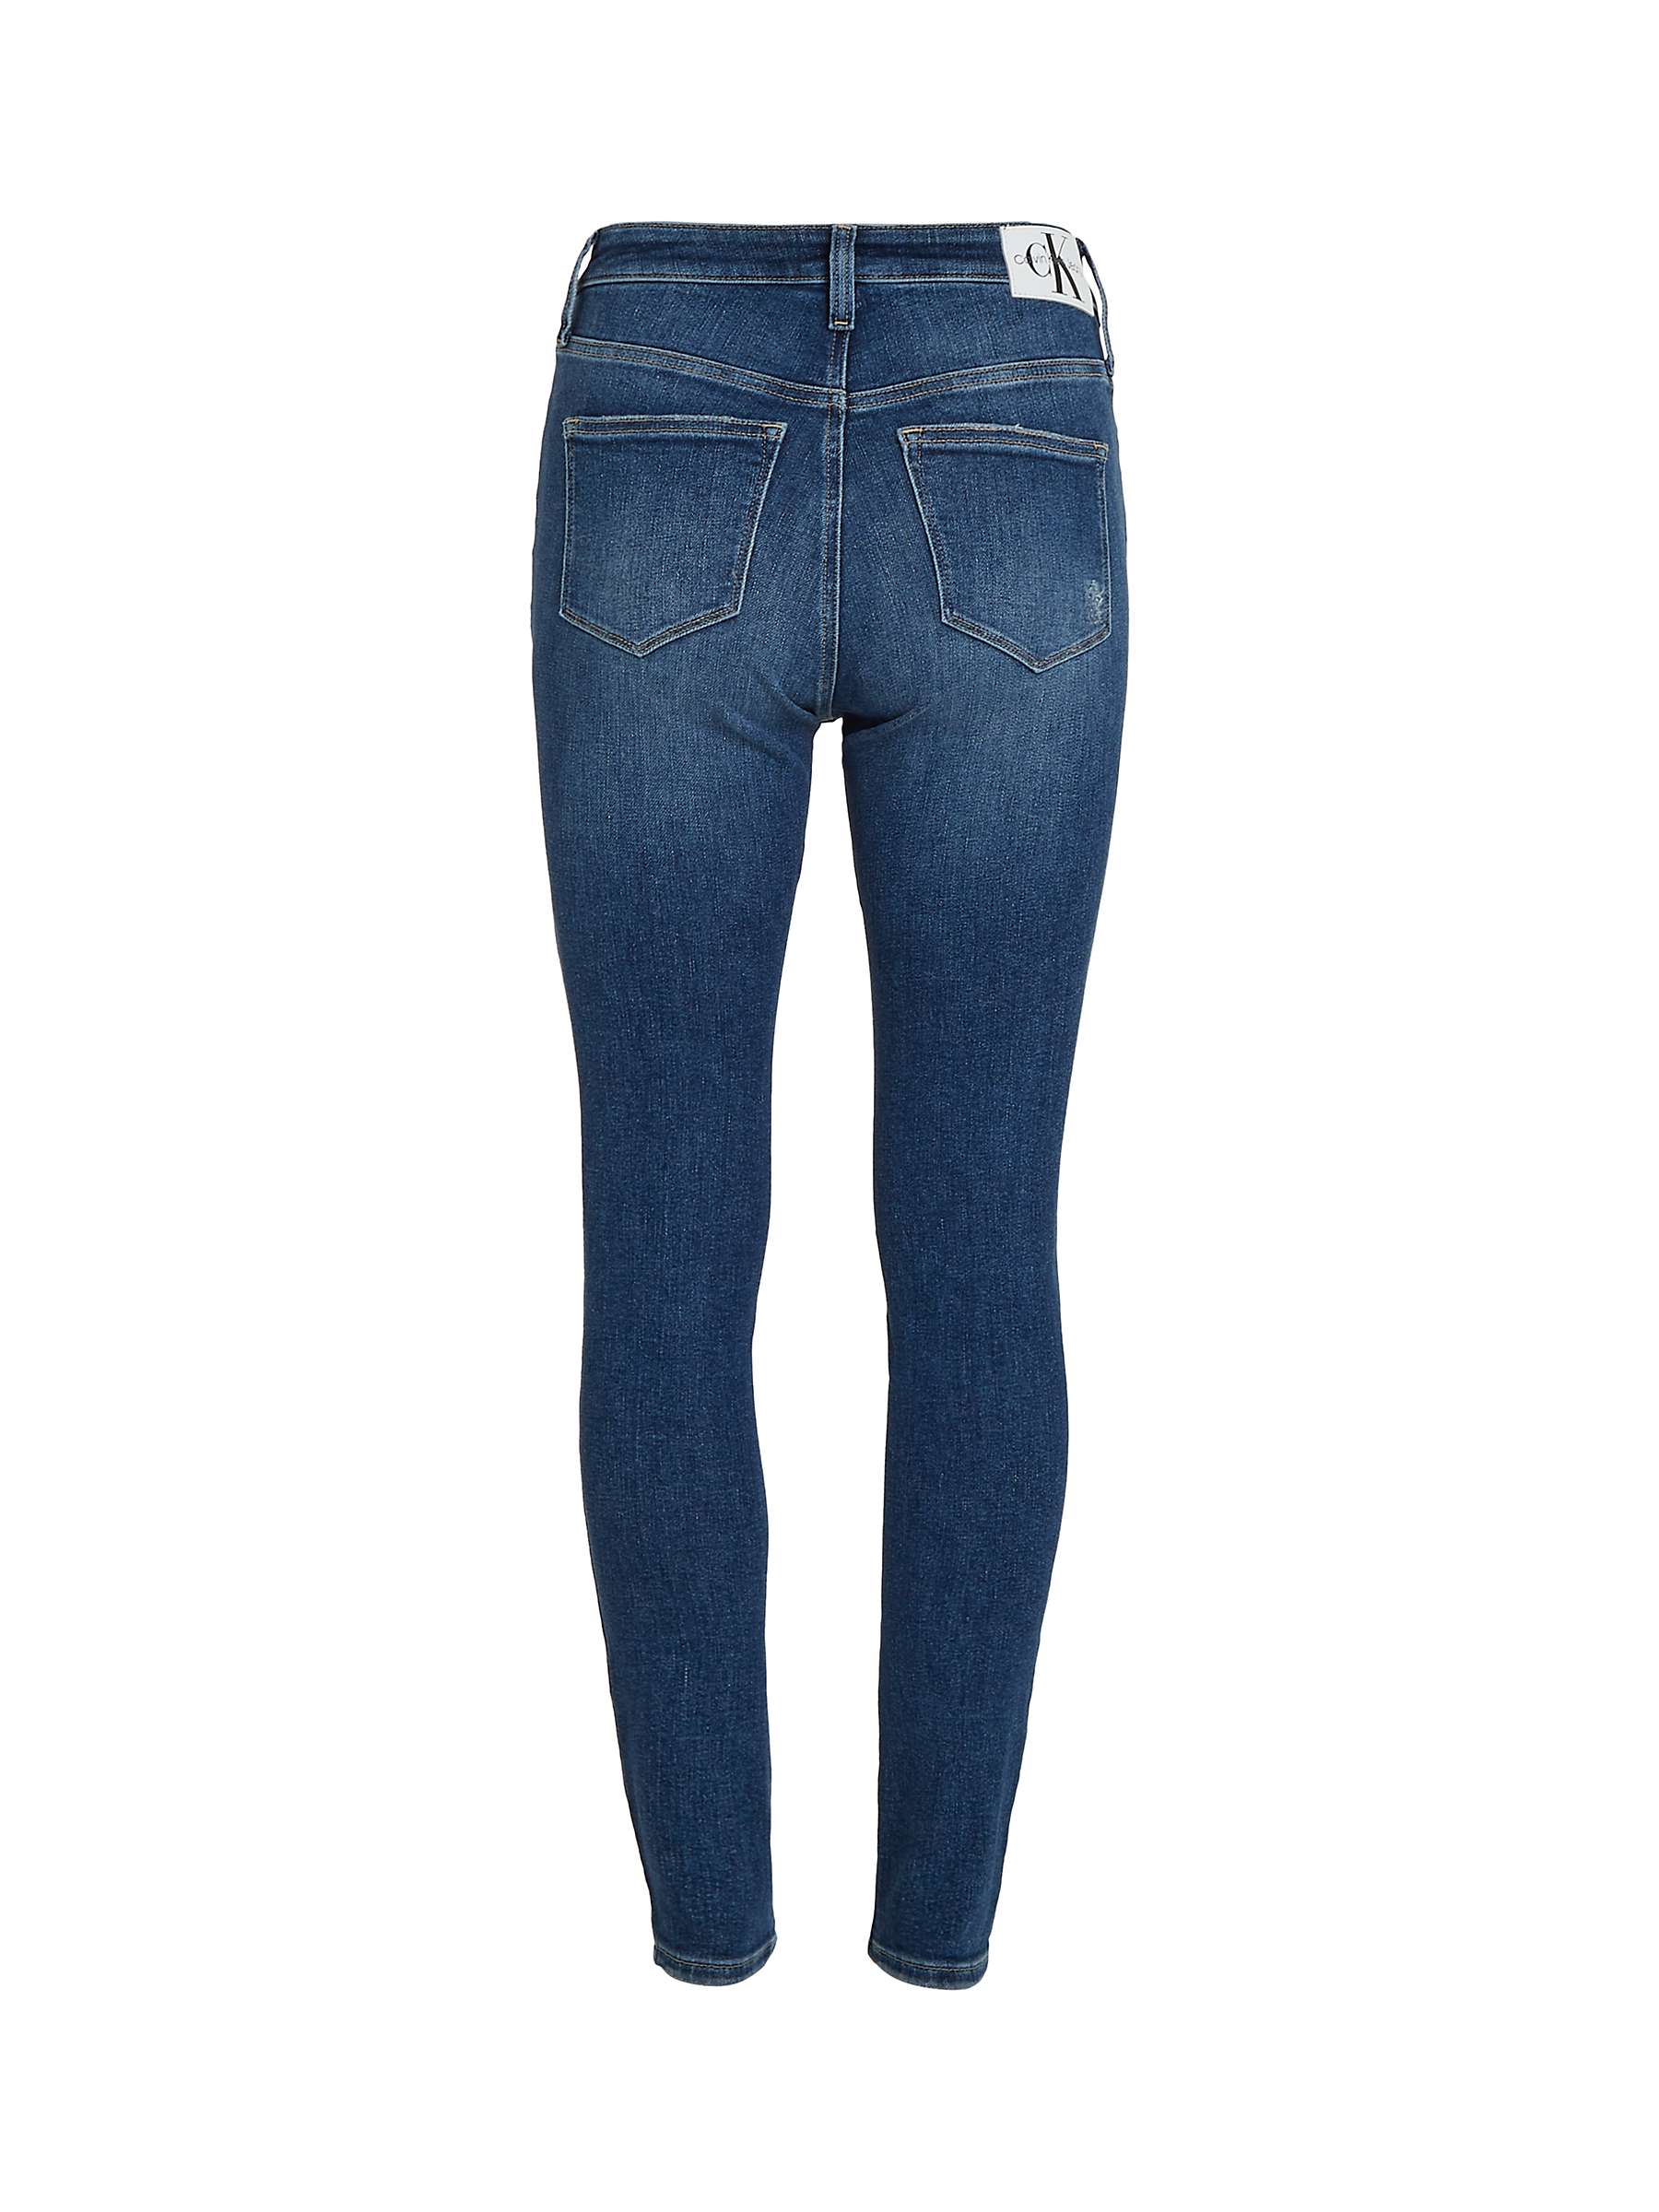 Buy Calvin Klein Cotton Blend Skinny Jeans, Denim Dark Online at johnlewis.com